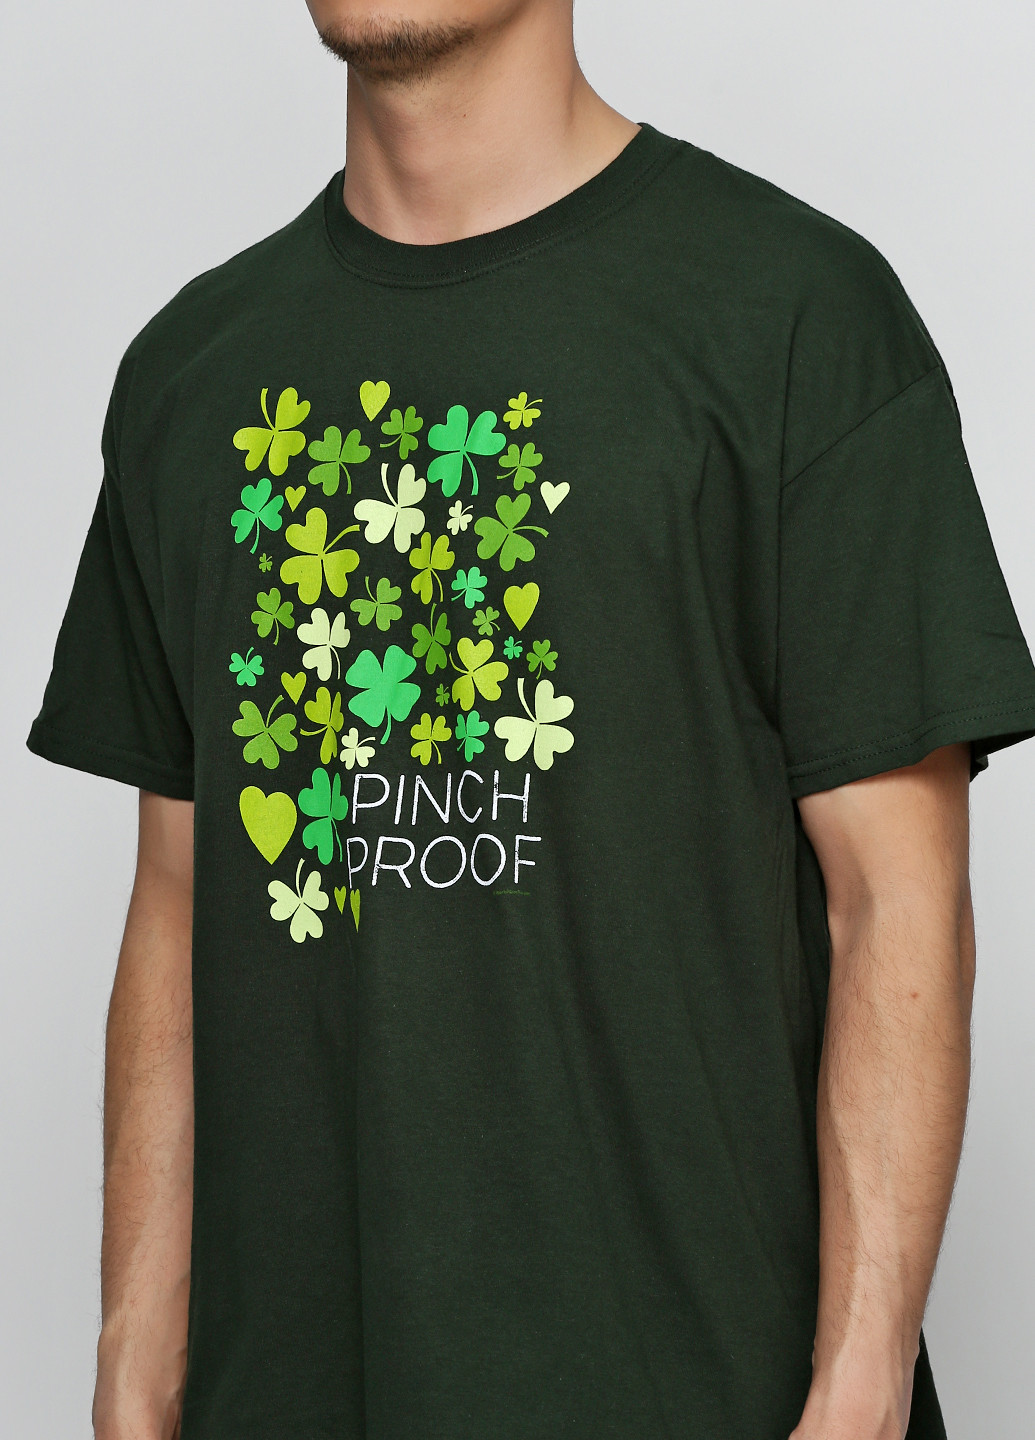 Темно-зеленая футболка Gildan